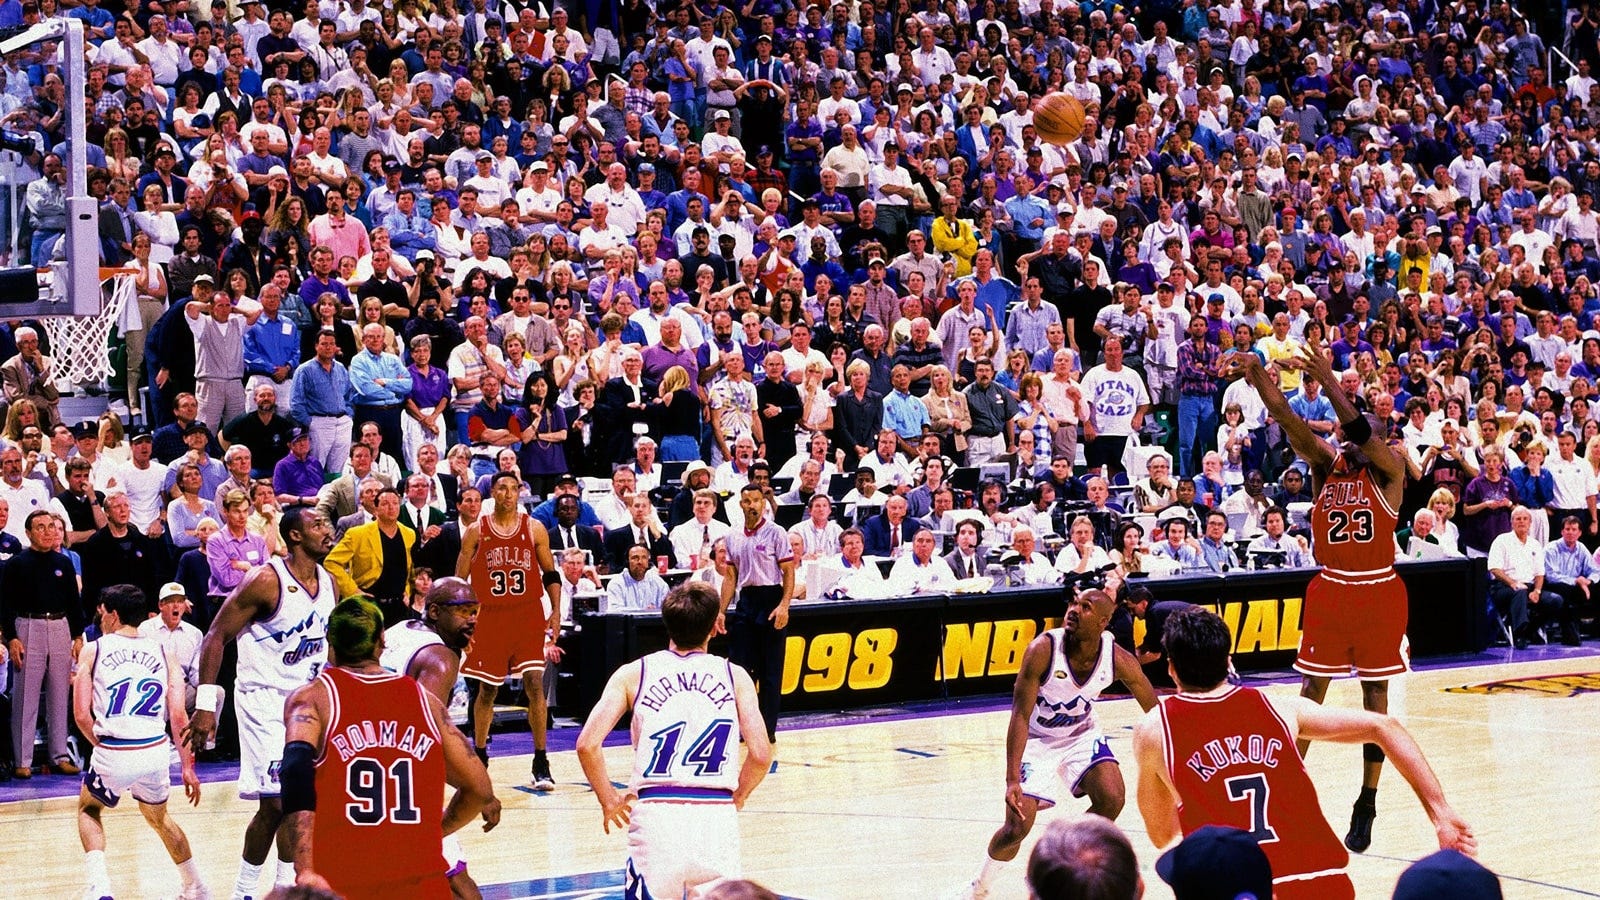 Michael Jordan The Last Dance: Awesome detail in iconic Utah Jazz 1998 photo